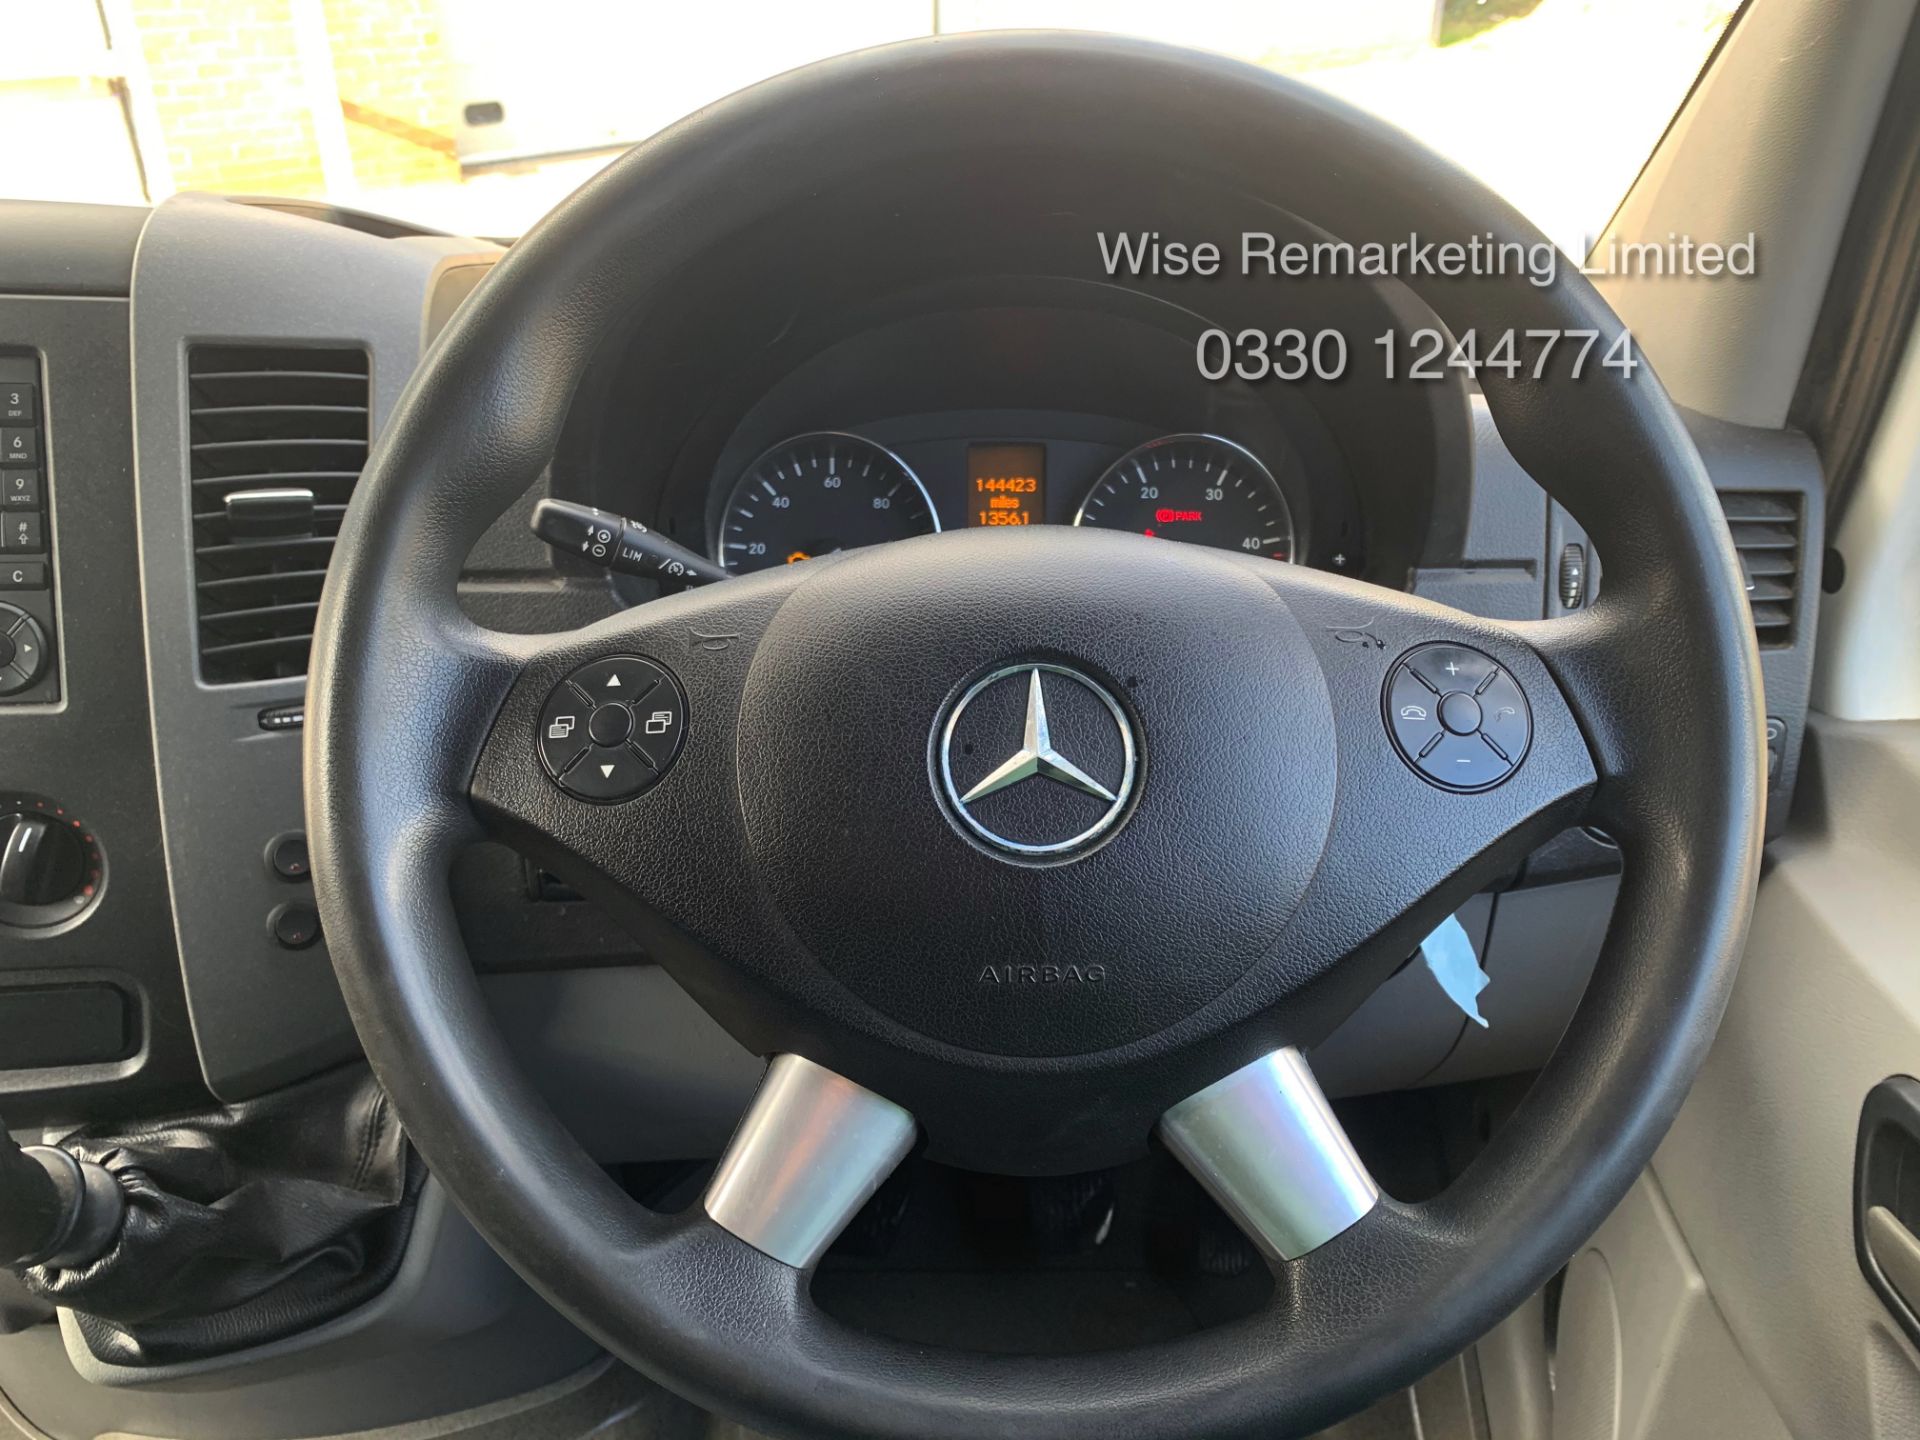 Mercedes Sprinter 313 2.1 CDI (129 BHP) 6 Speed 2015 Model - Lez Compliant - Image 19 of 19